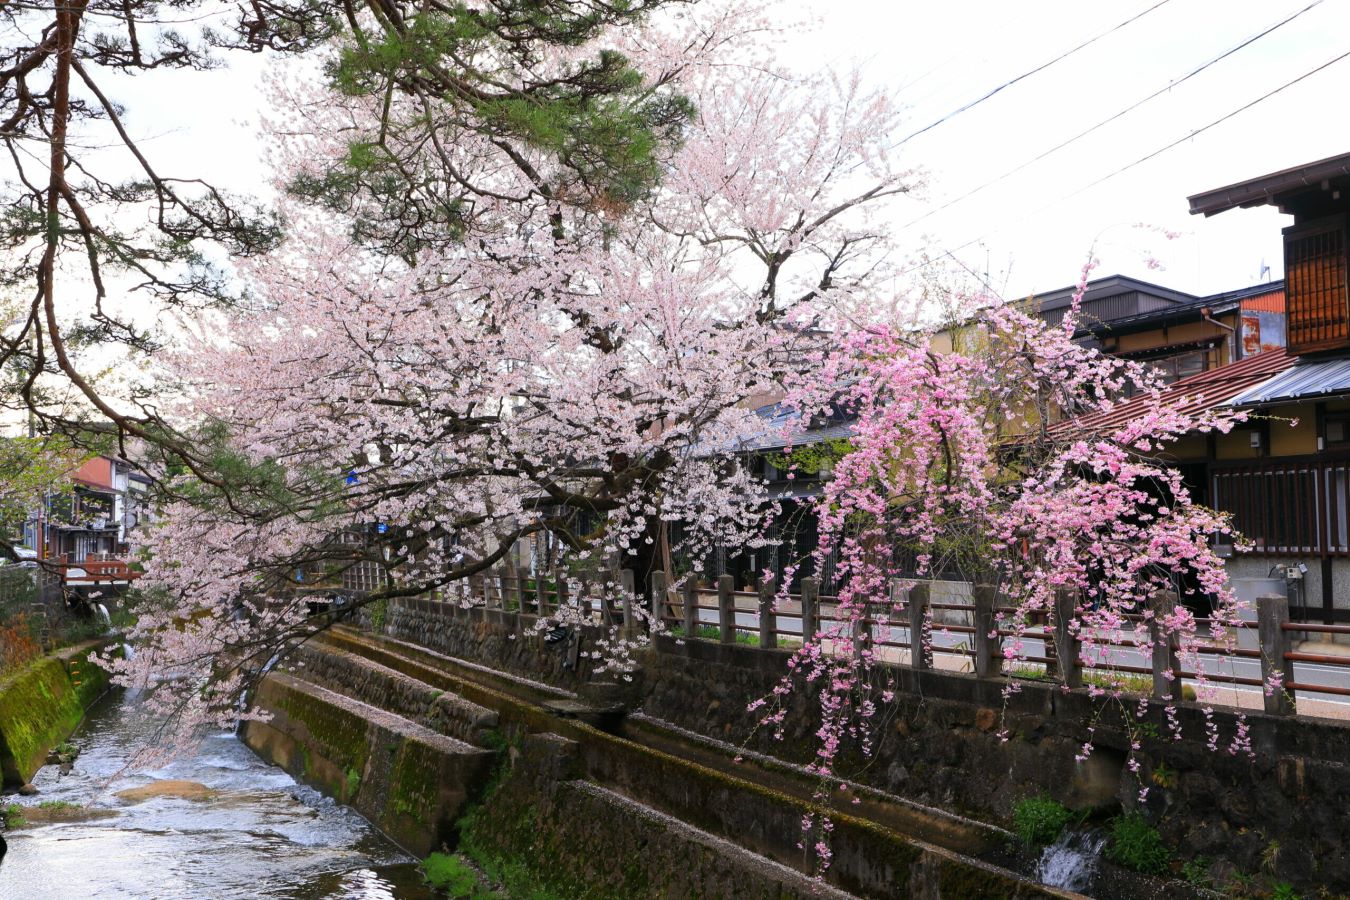 Cherry blossoms of Enako River in Takayama